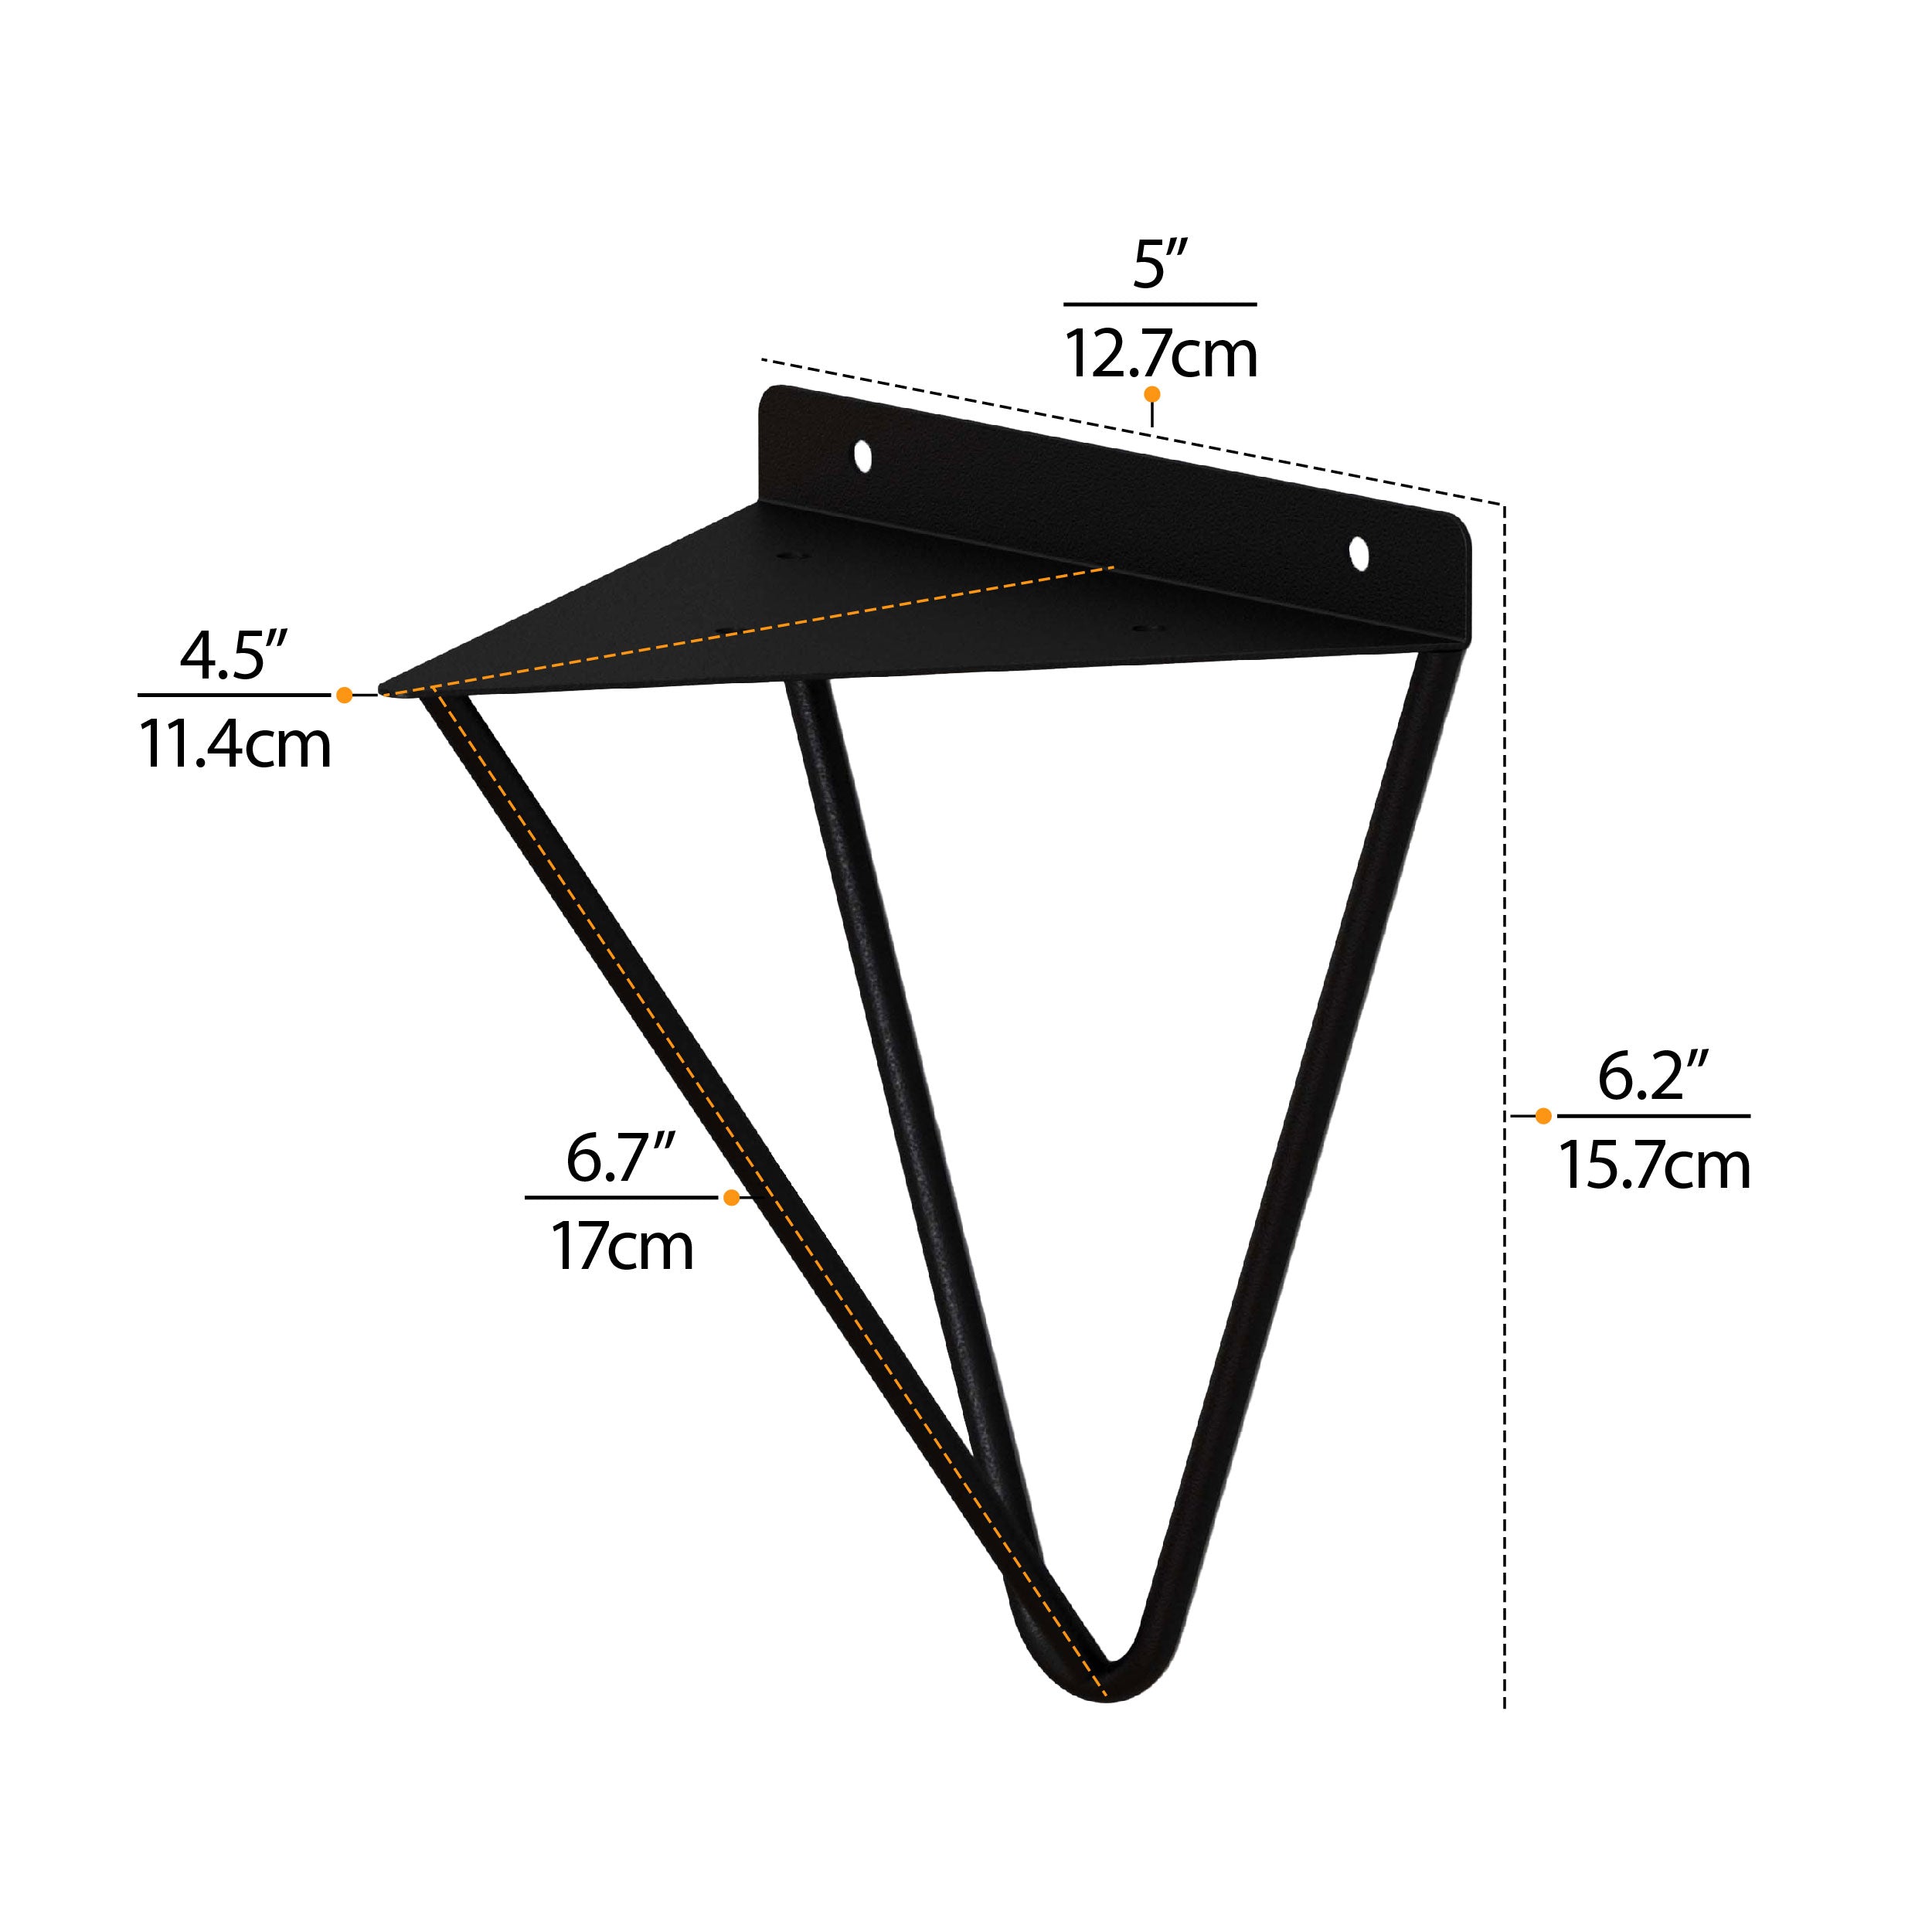 Dimensional diagram of a black triangular wall shelf bracket with measurements.